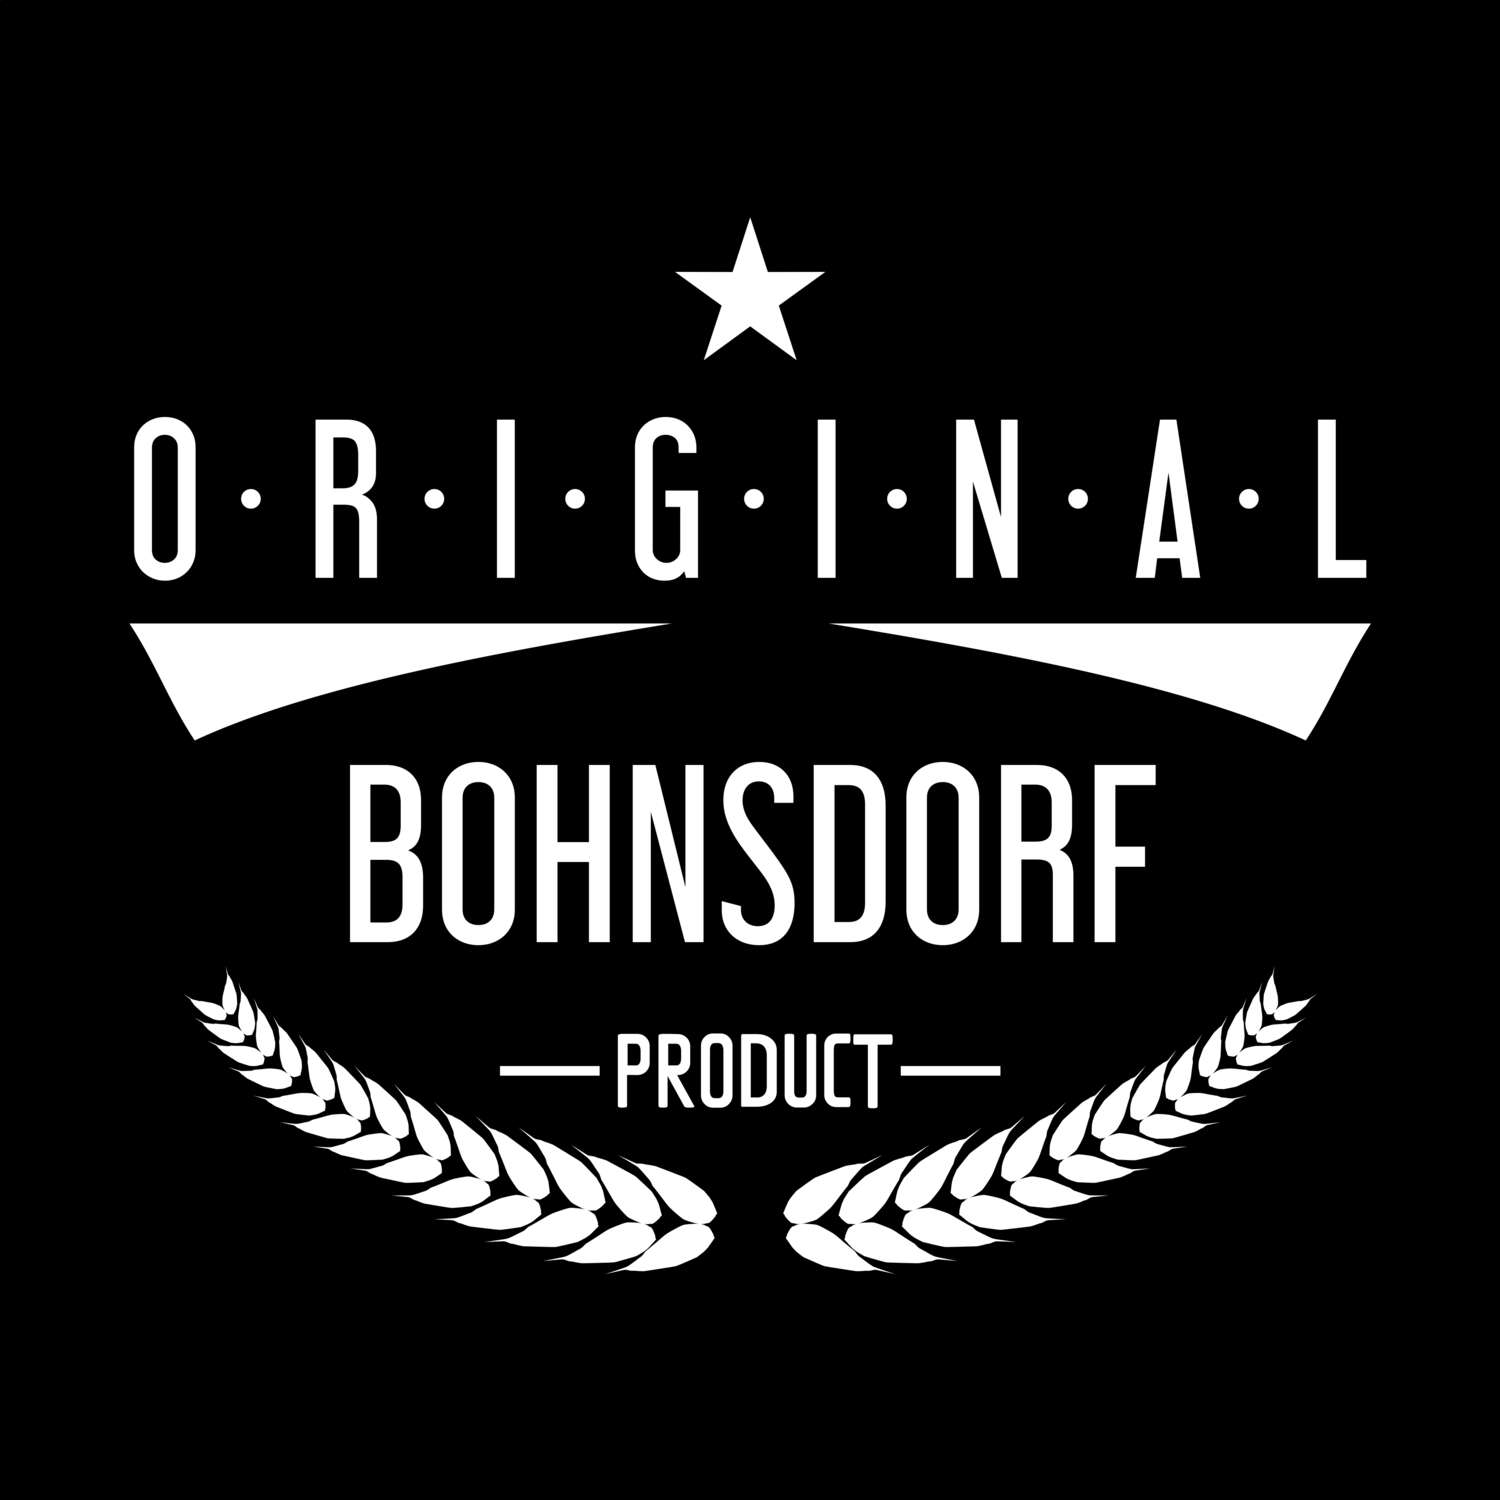 Bohnsdorf T-Shirt »Original Product«